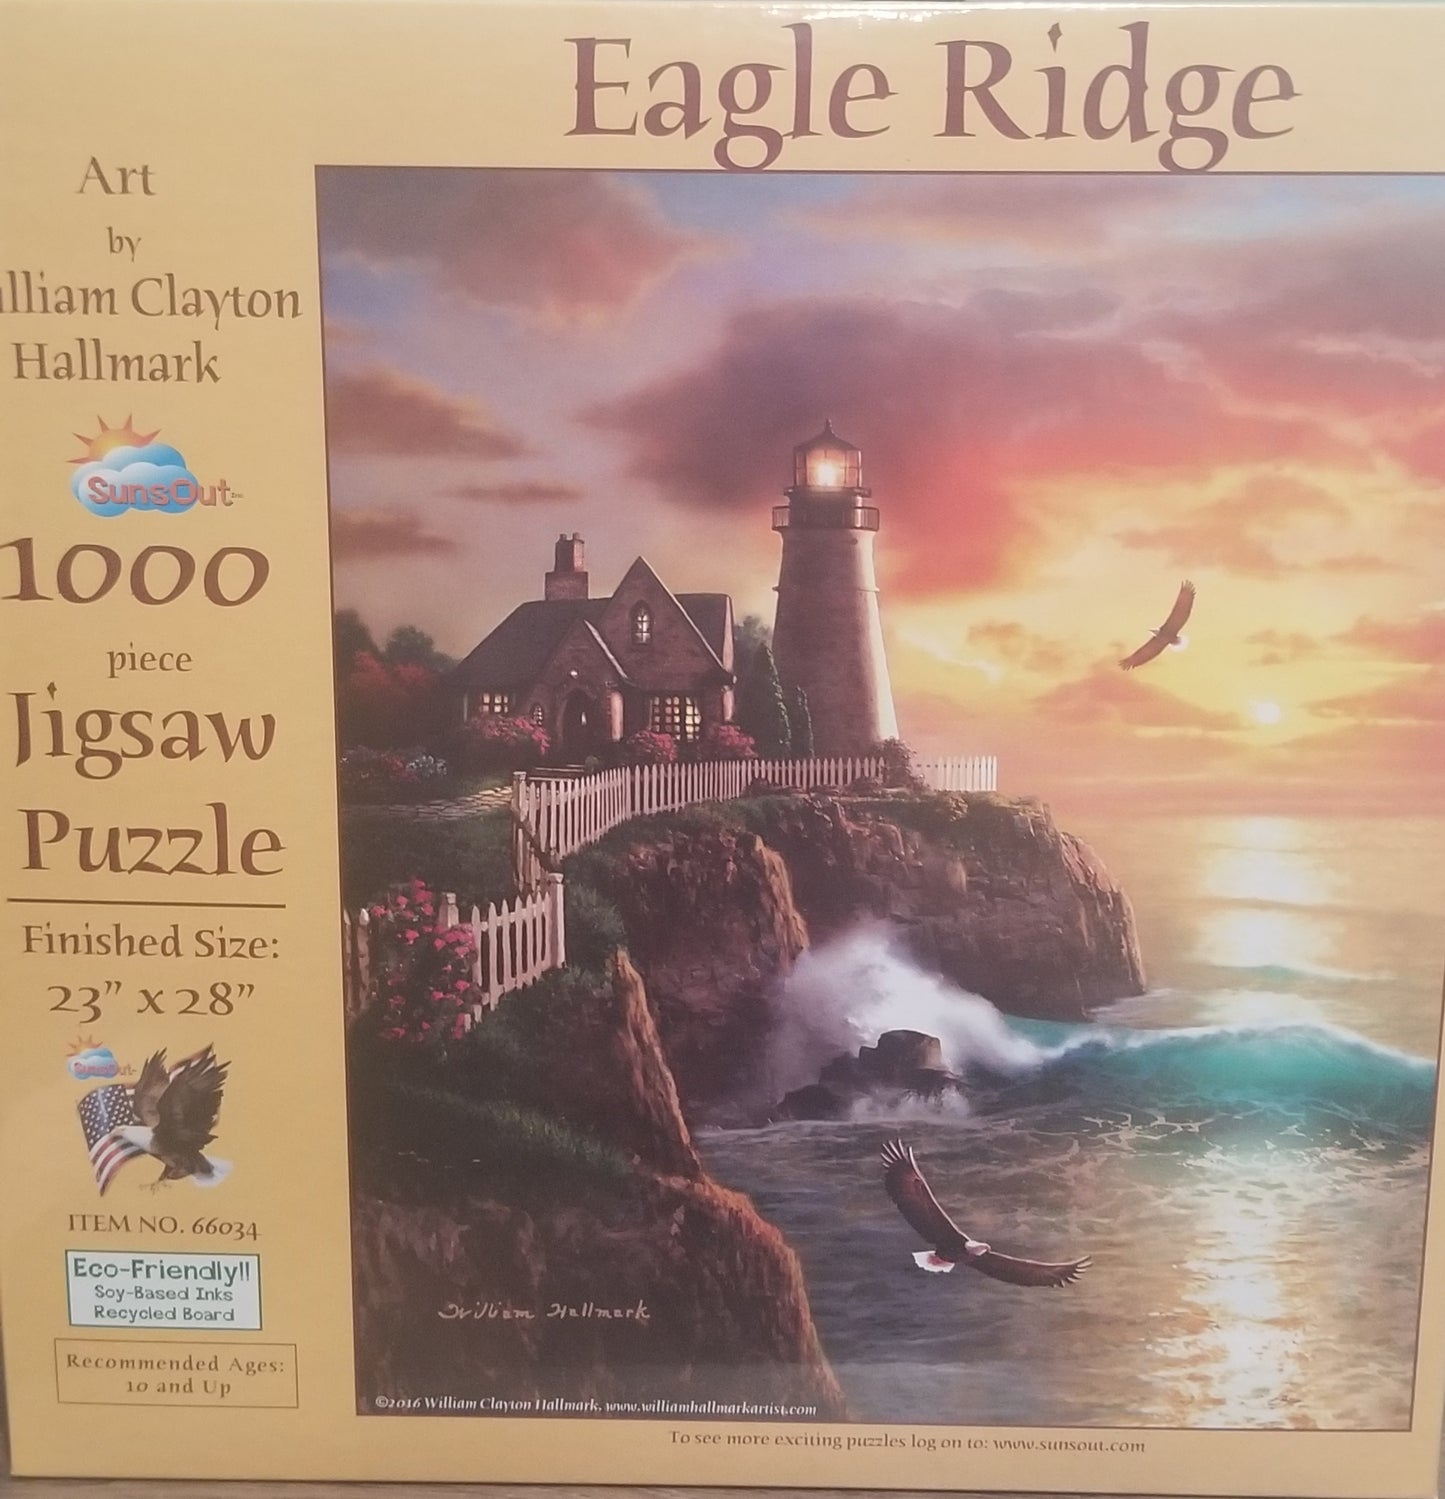 Eagle Ridge by William Clayton Hallmark, 1000 Piece Puzzle